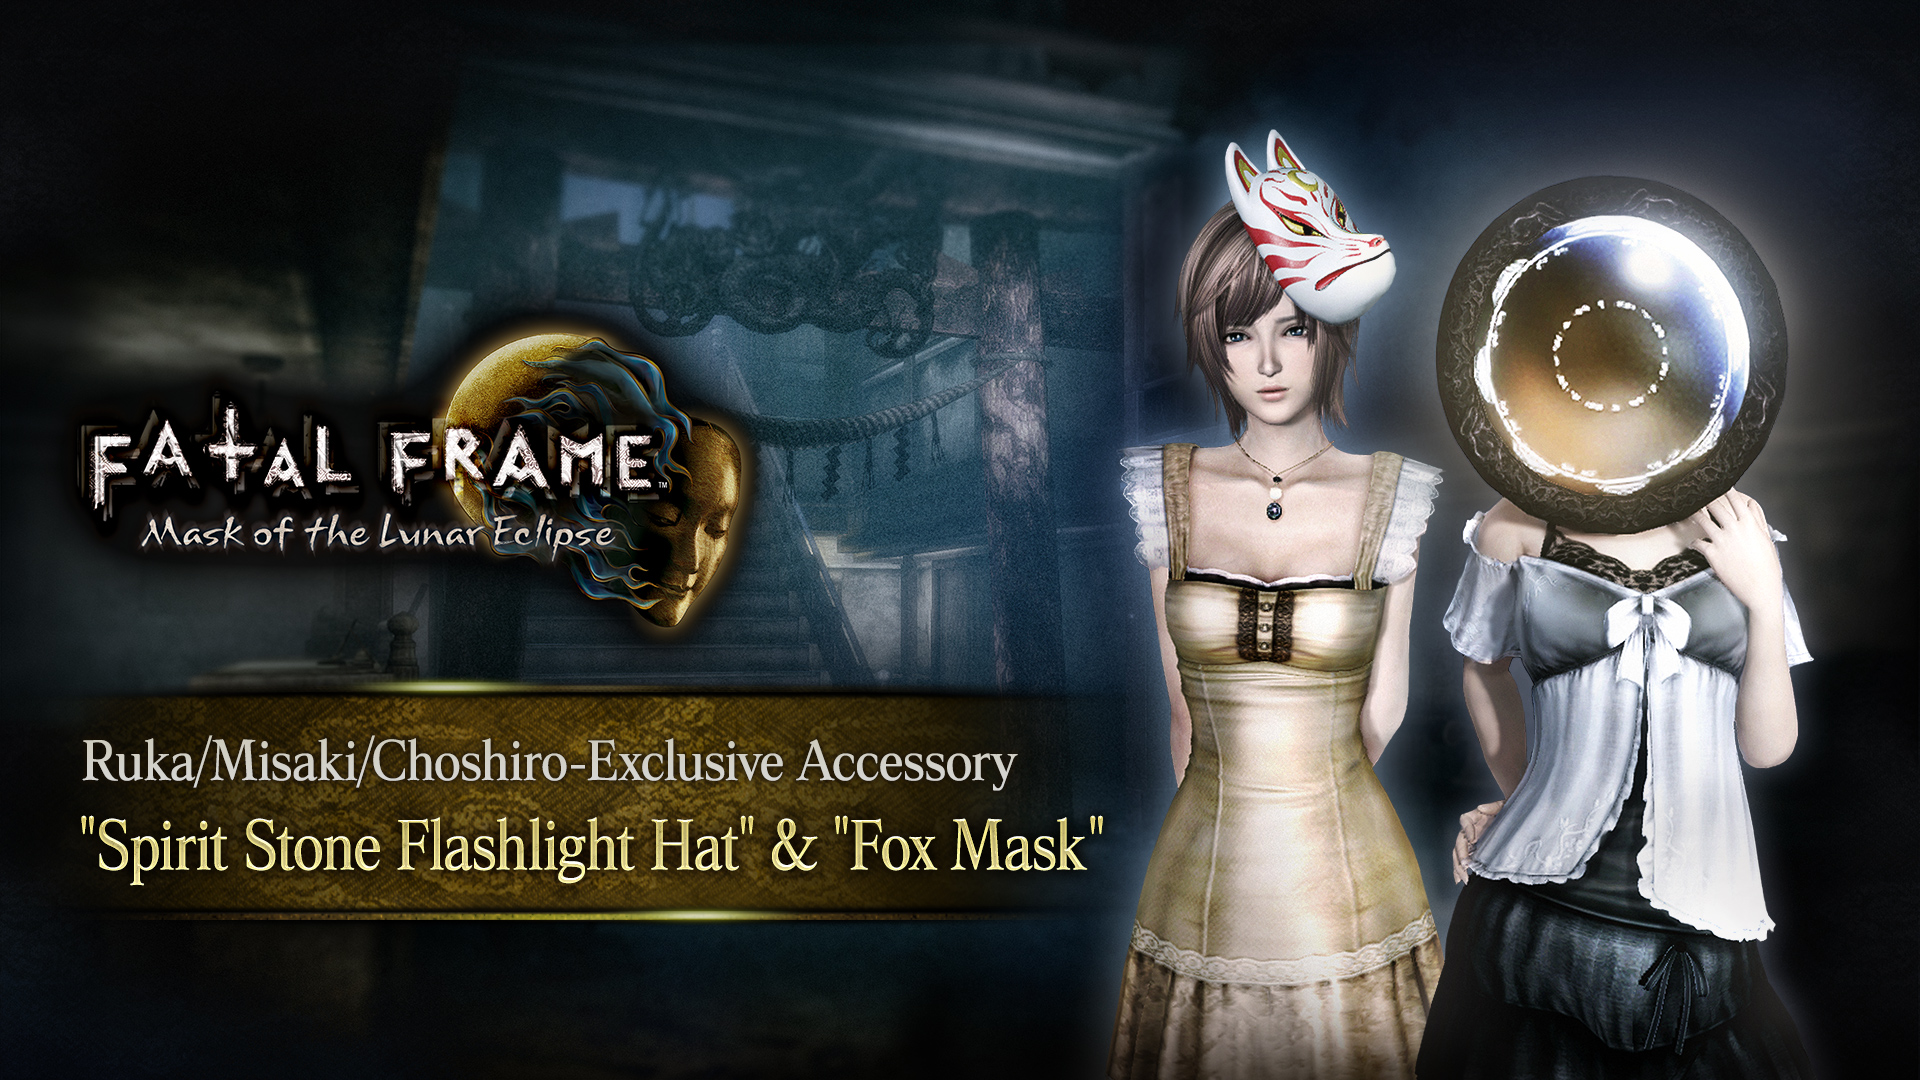 Ruka/Misaki/Choshiro-Exclusive Accessory (Spirit Stone Flashlight Hat & Fox Mask)